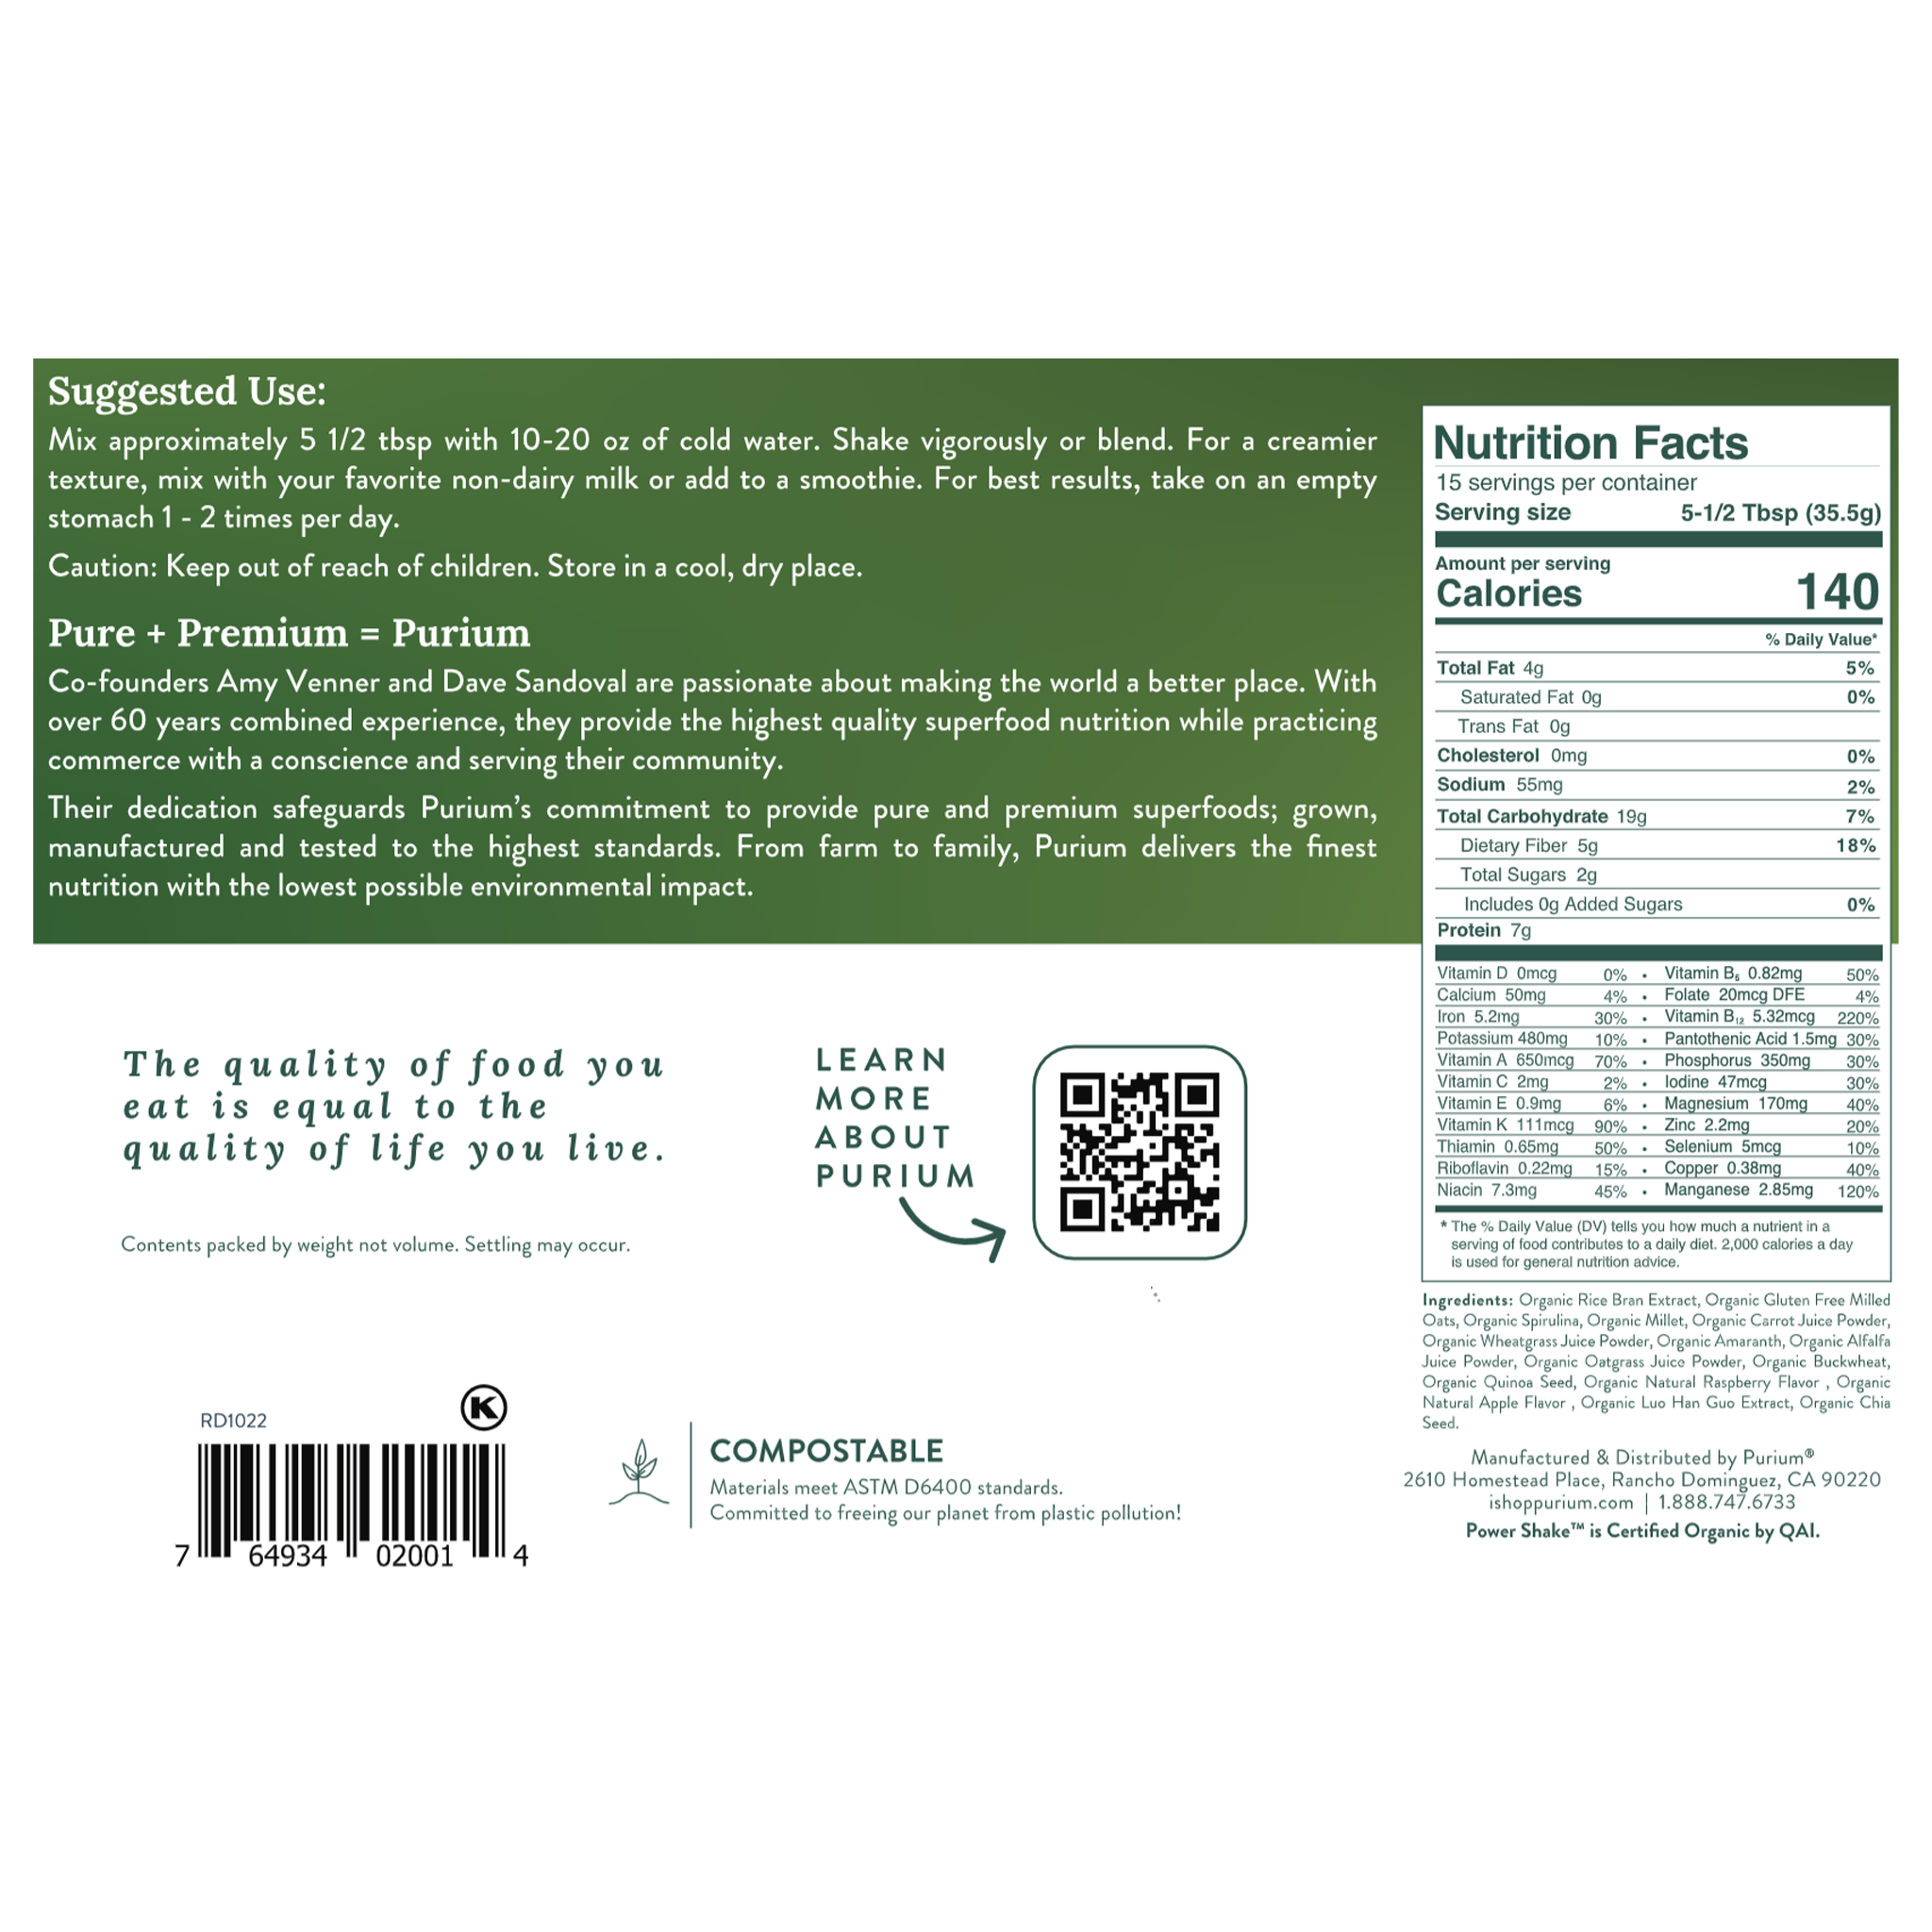 Purium Power Shake Apple Berry (Organic Rice Bran Extract, Organic Oat Flour, Organic Spirulina, Organic Millet, Organic Carrot Juice Powder, and Organic Wheatgrass) Meal Replacement 5 Pack